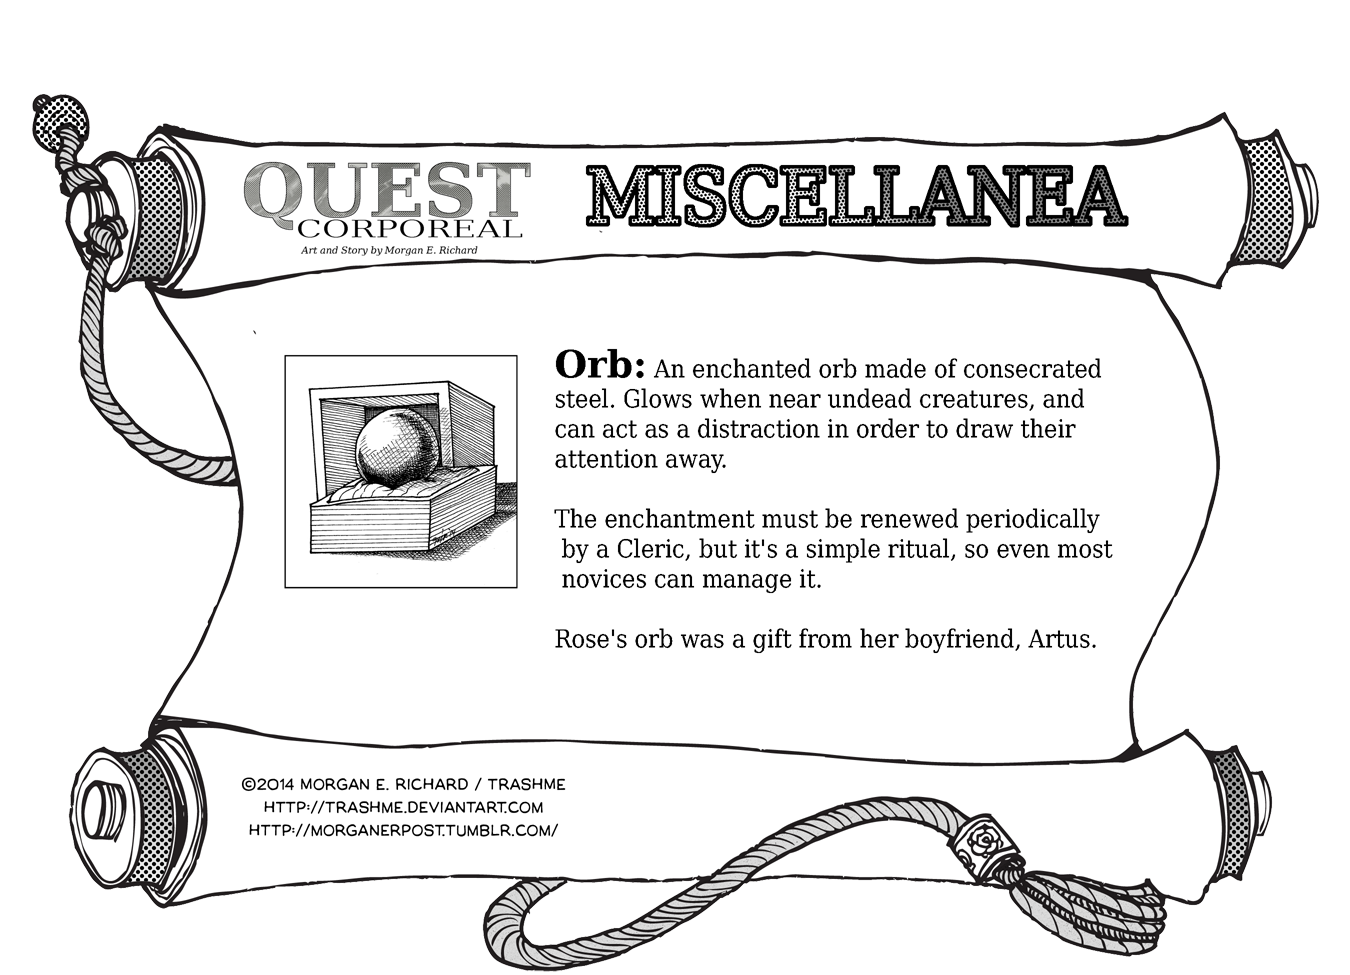 Miscellanea Corporeal: Orb